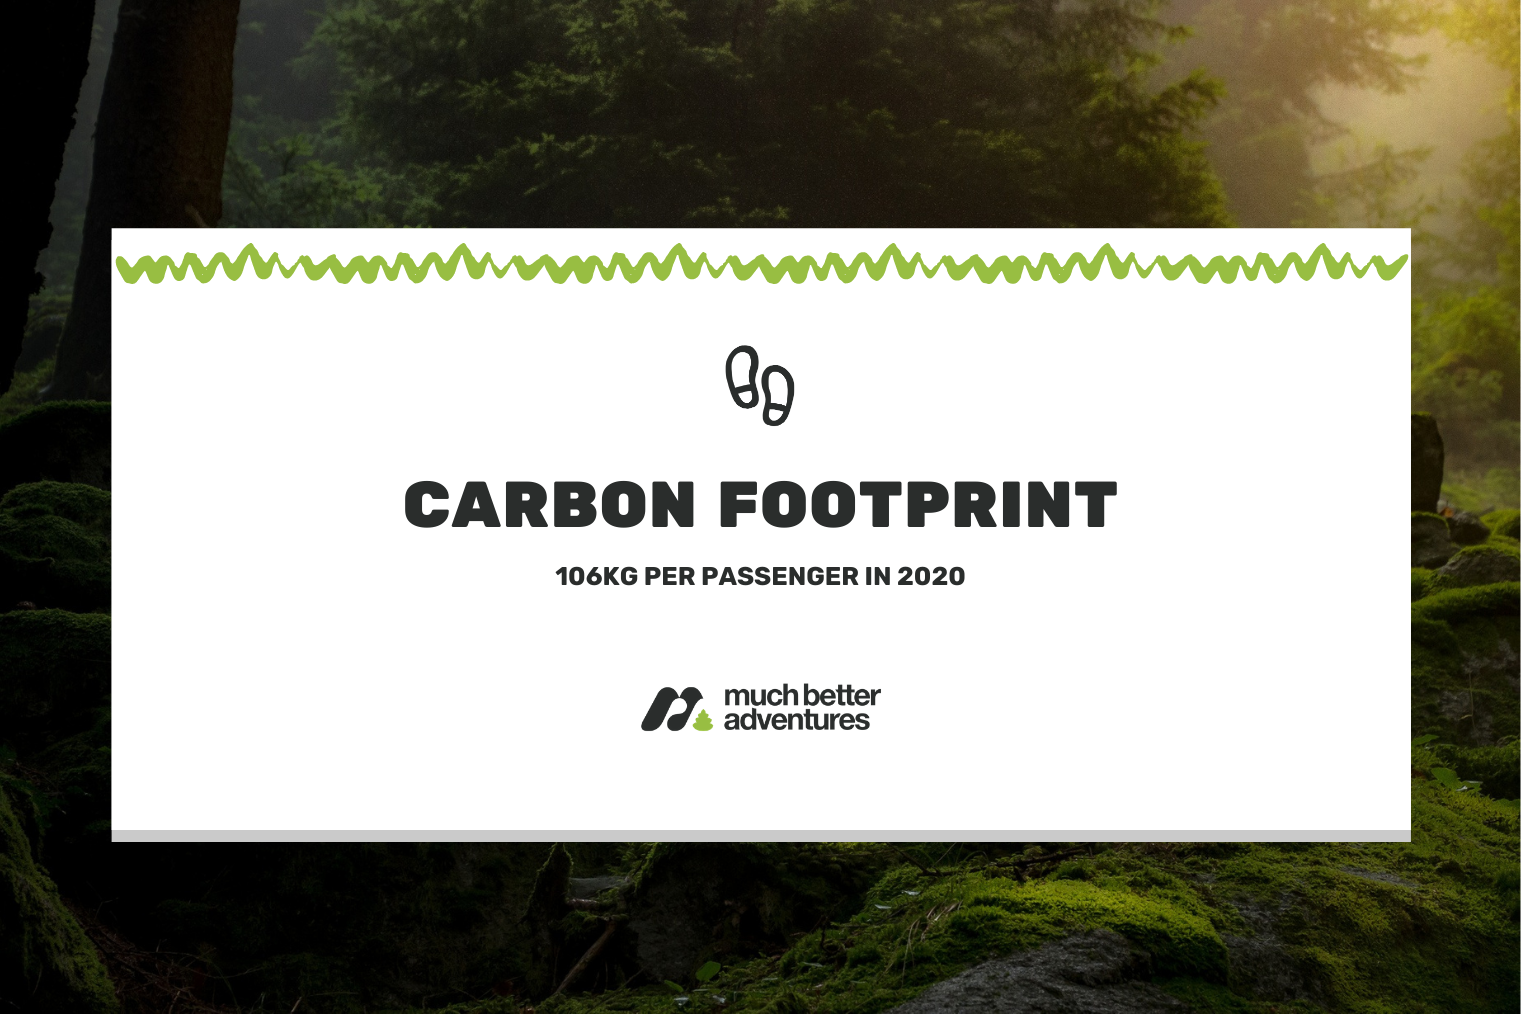 Much Better Adventures carbon footprint pledge 2020